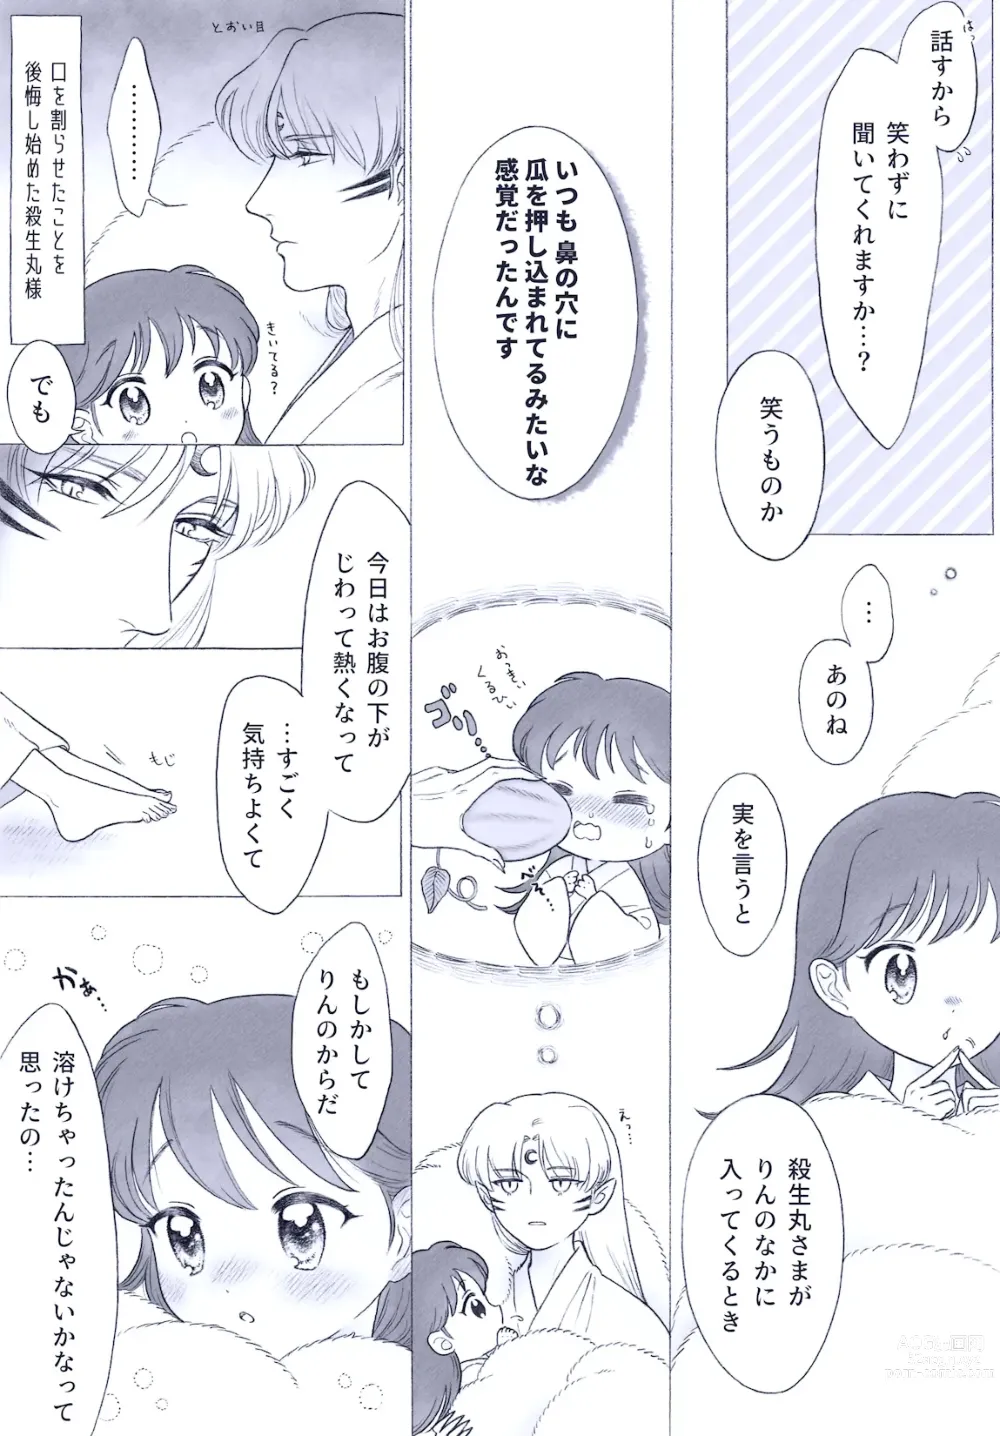 Page 4 of doujinshi Otona no SeRin Manga